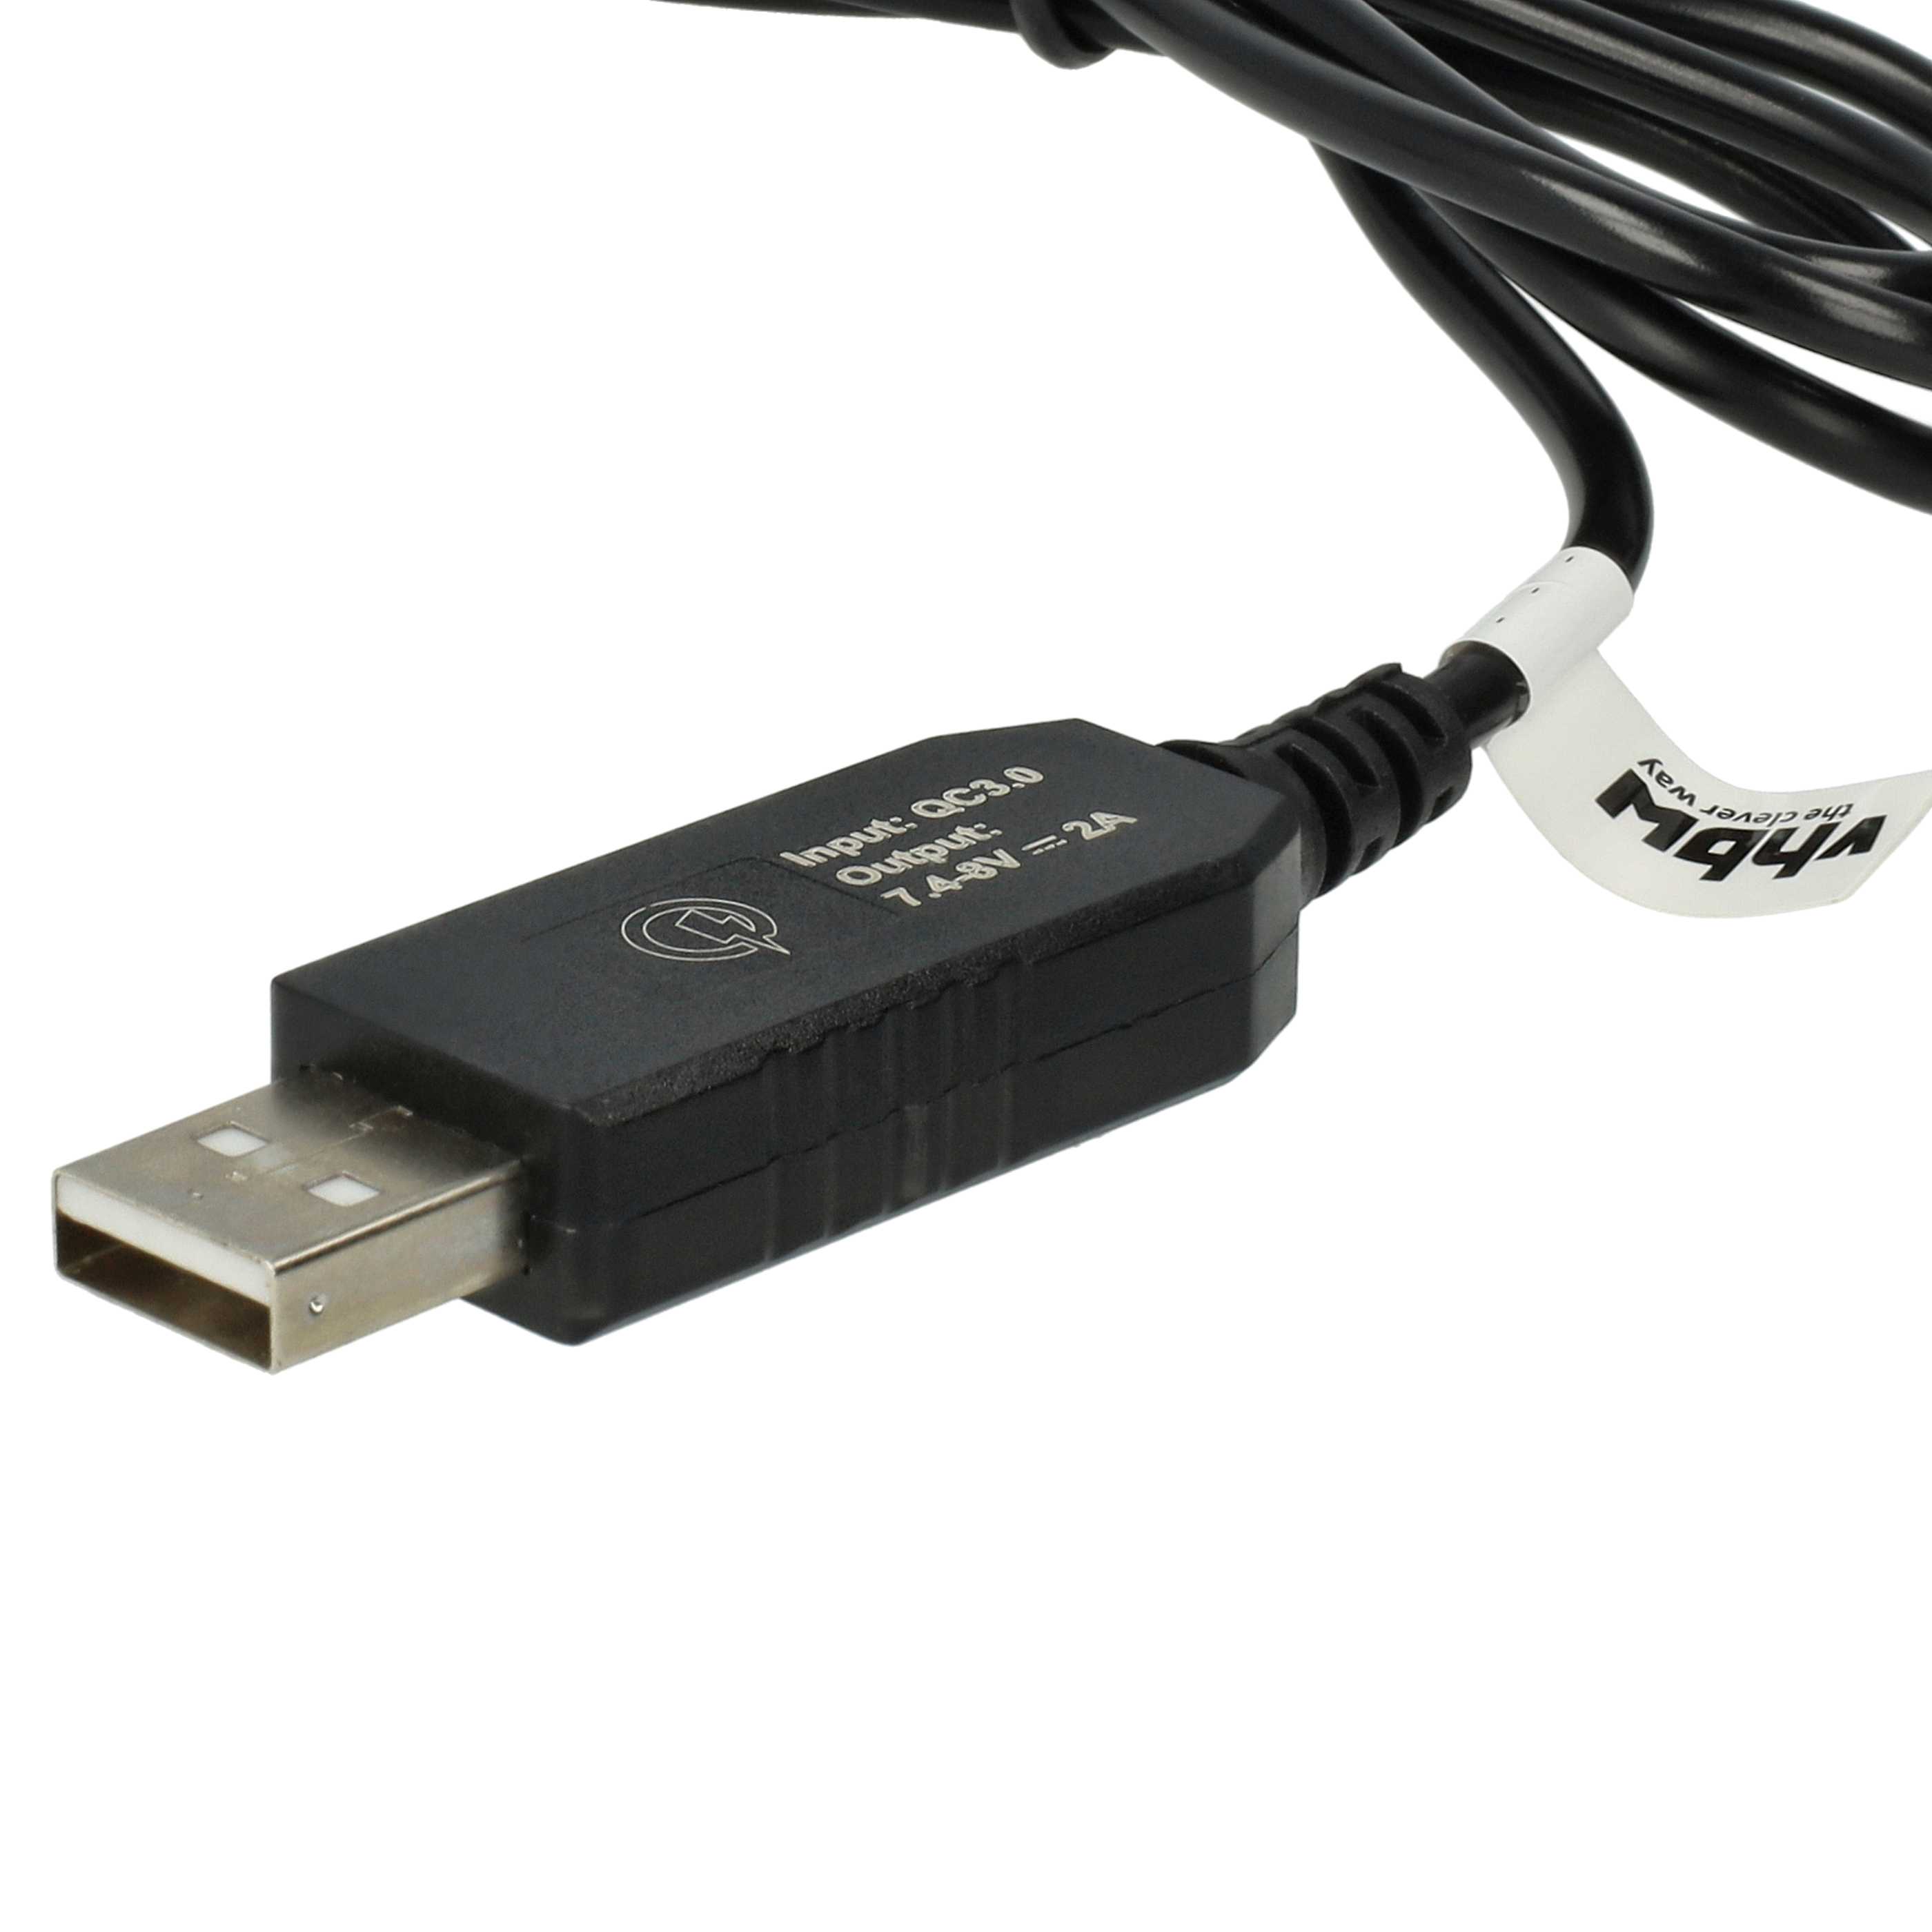 USB Ladekabel passend für Canon DC-Coupler Kamera, Videokamera, Camcorder - 90 cm